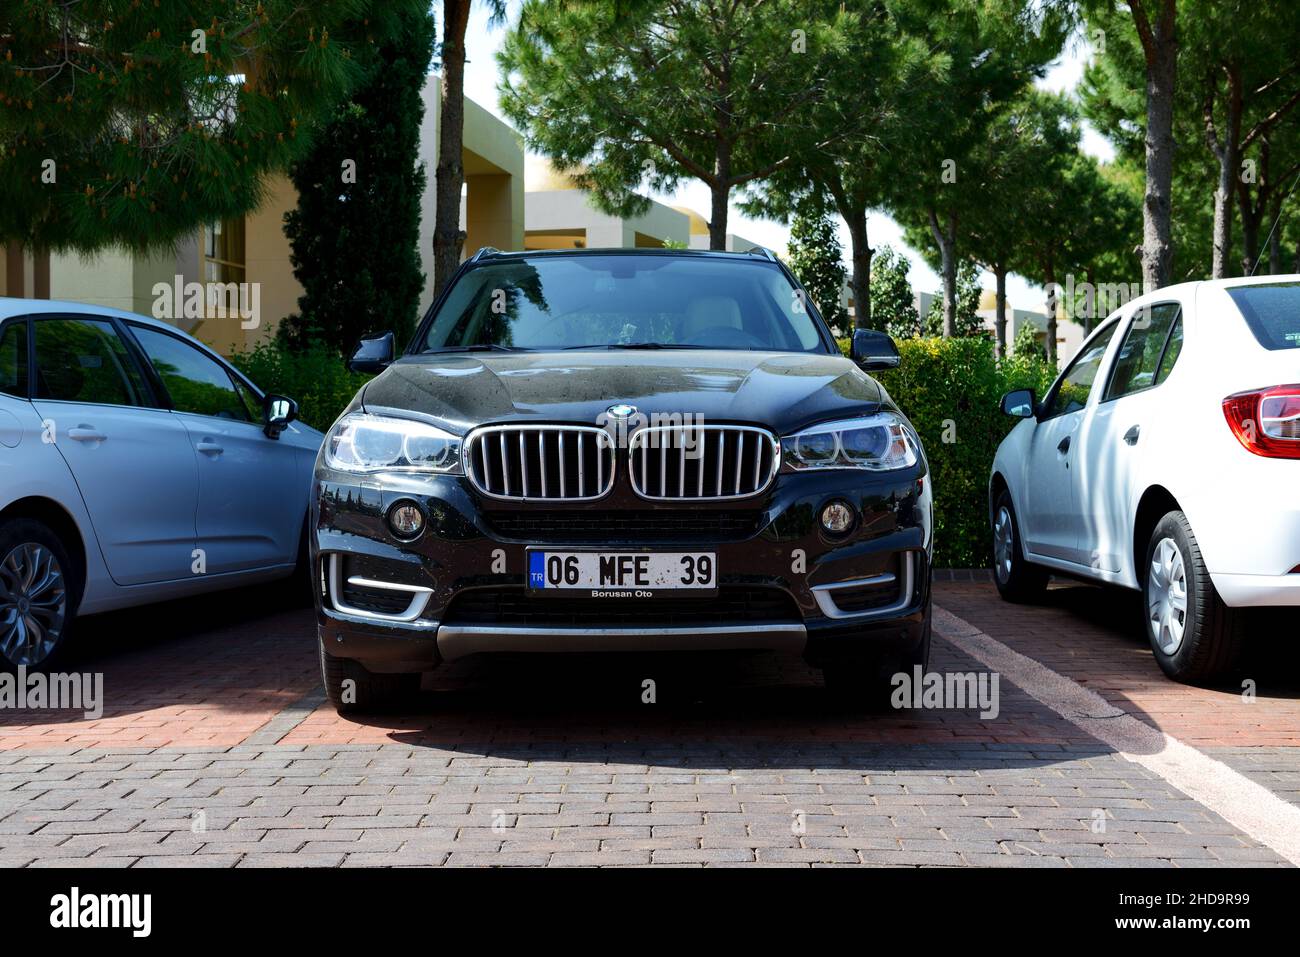 ANTALYA, TURKEY - APRIL 22: The BMW X5 car parked near modern luxury hotel on April 22, 2014 in Antalya, Turkey. Stock Photo